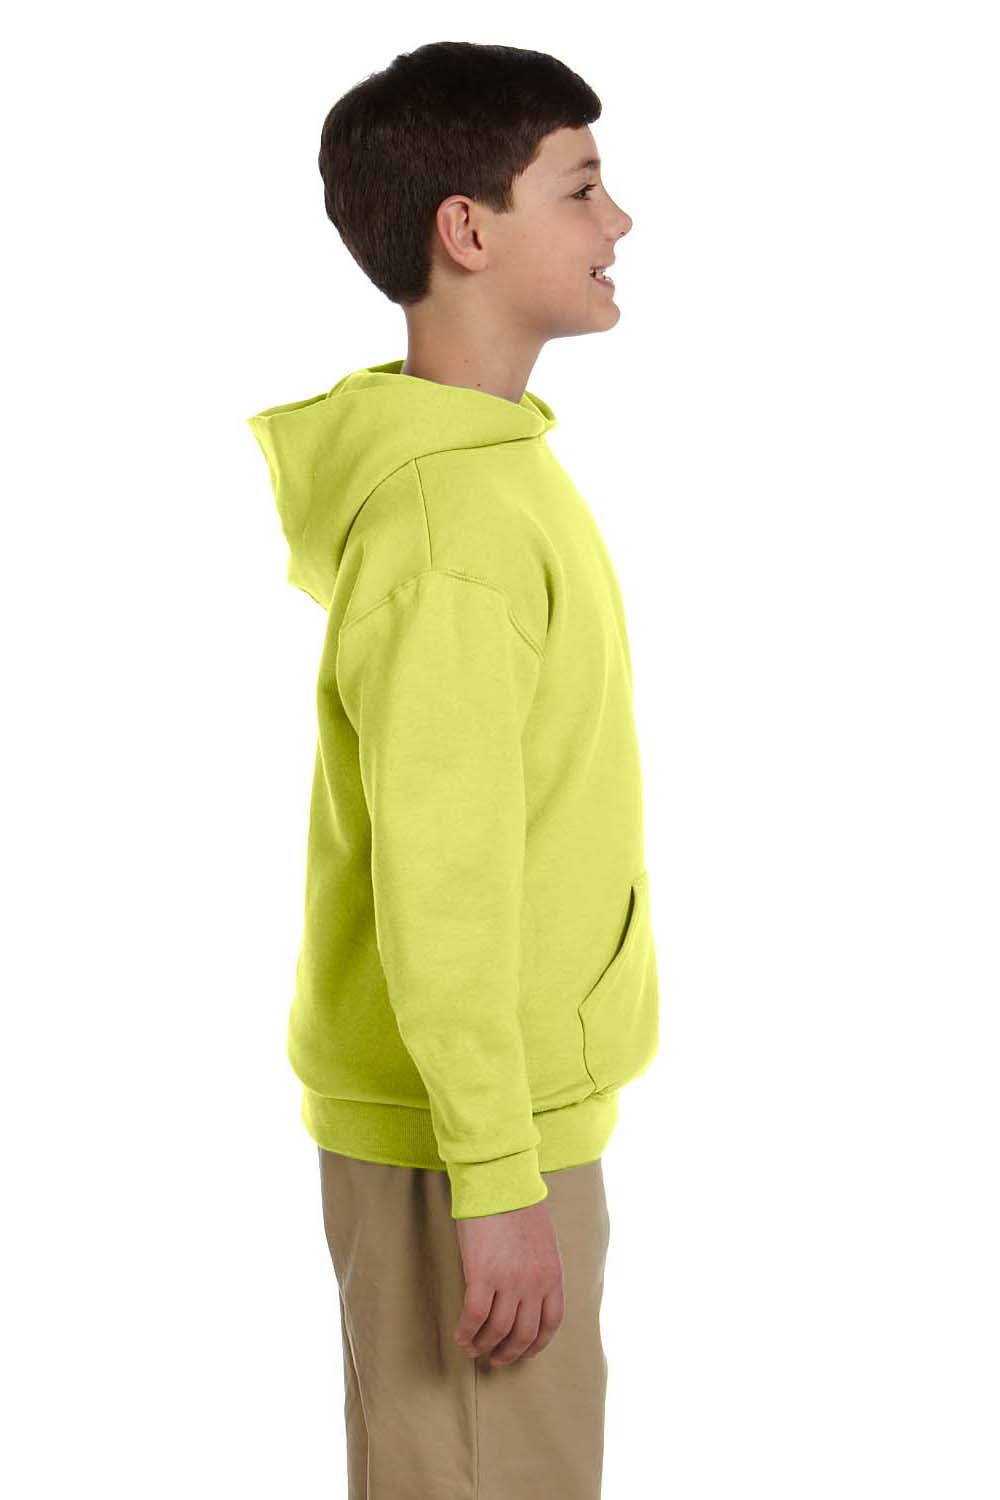 Jerzees 996Y Youth NuBlend Fleece Hooded Sweatshirt Hoodie Safety Green Side